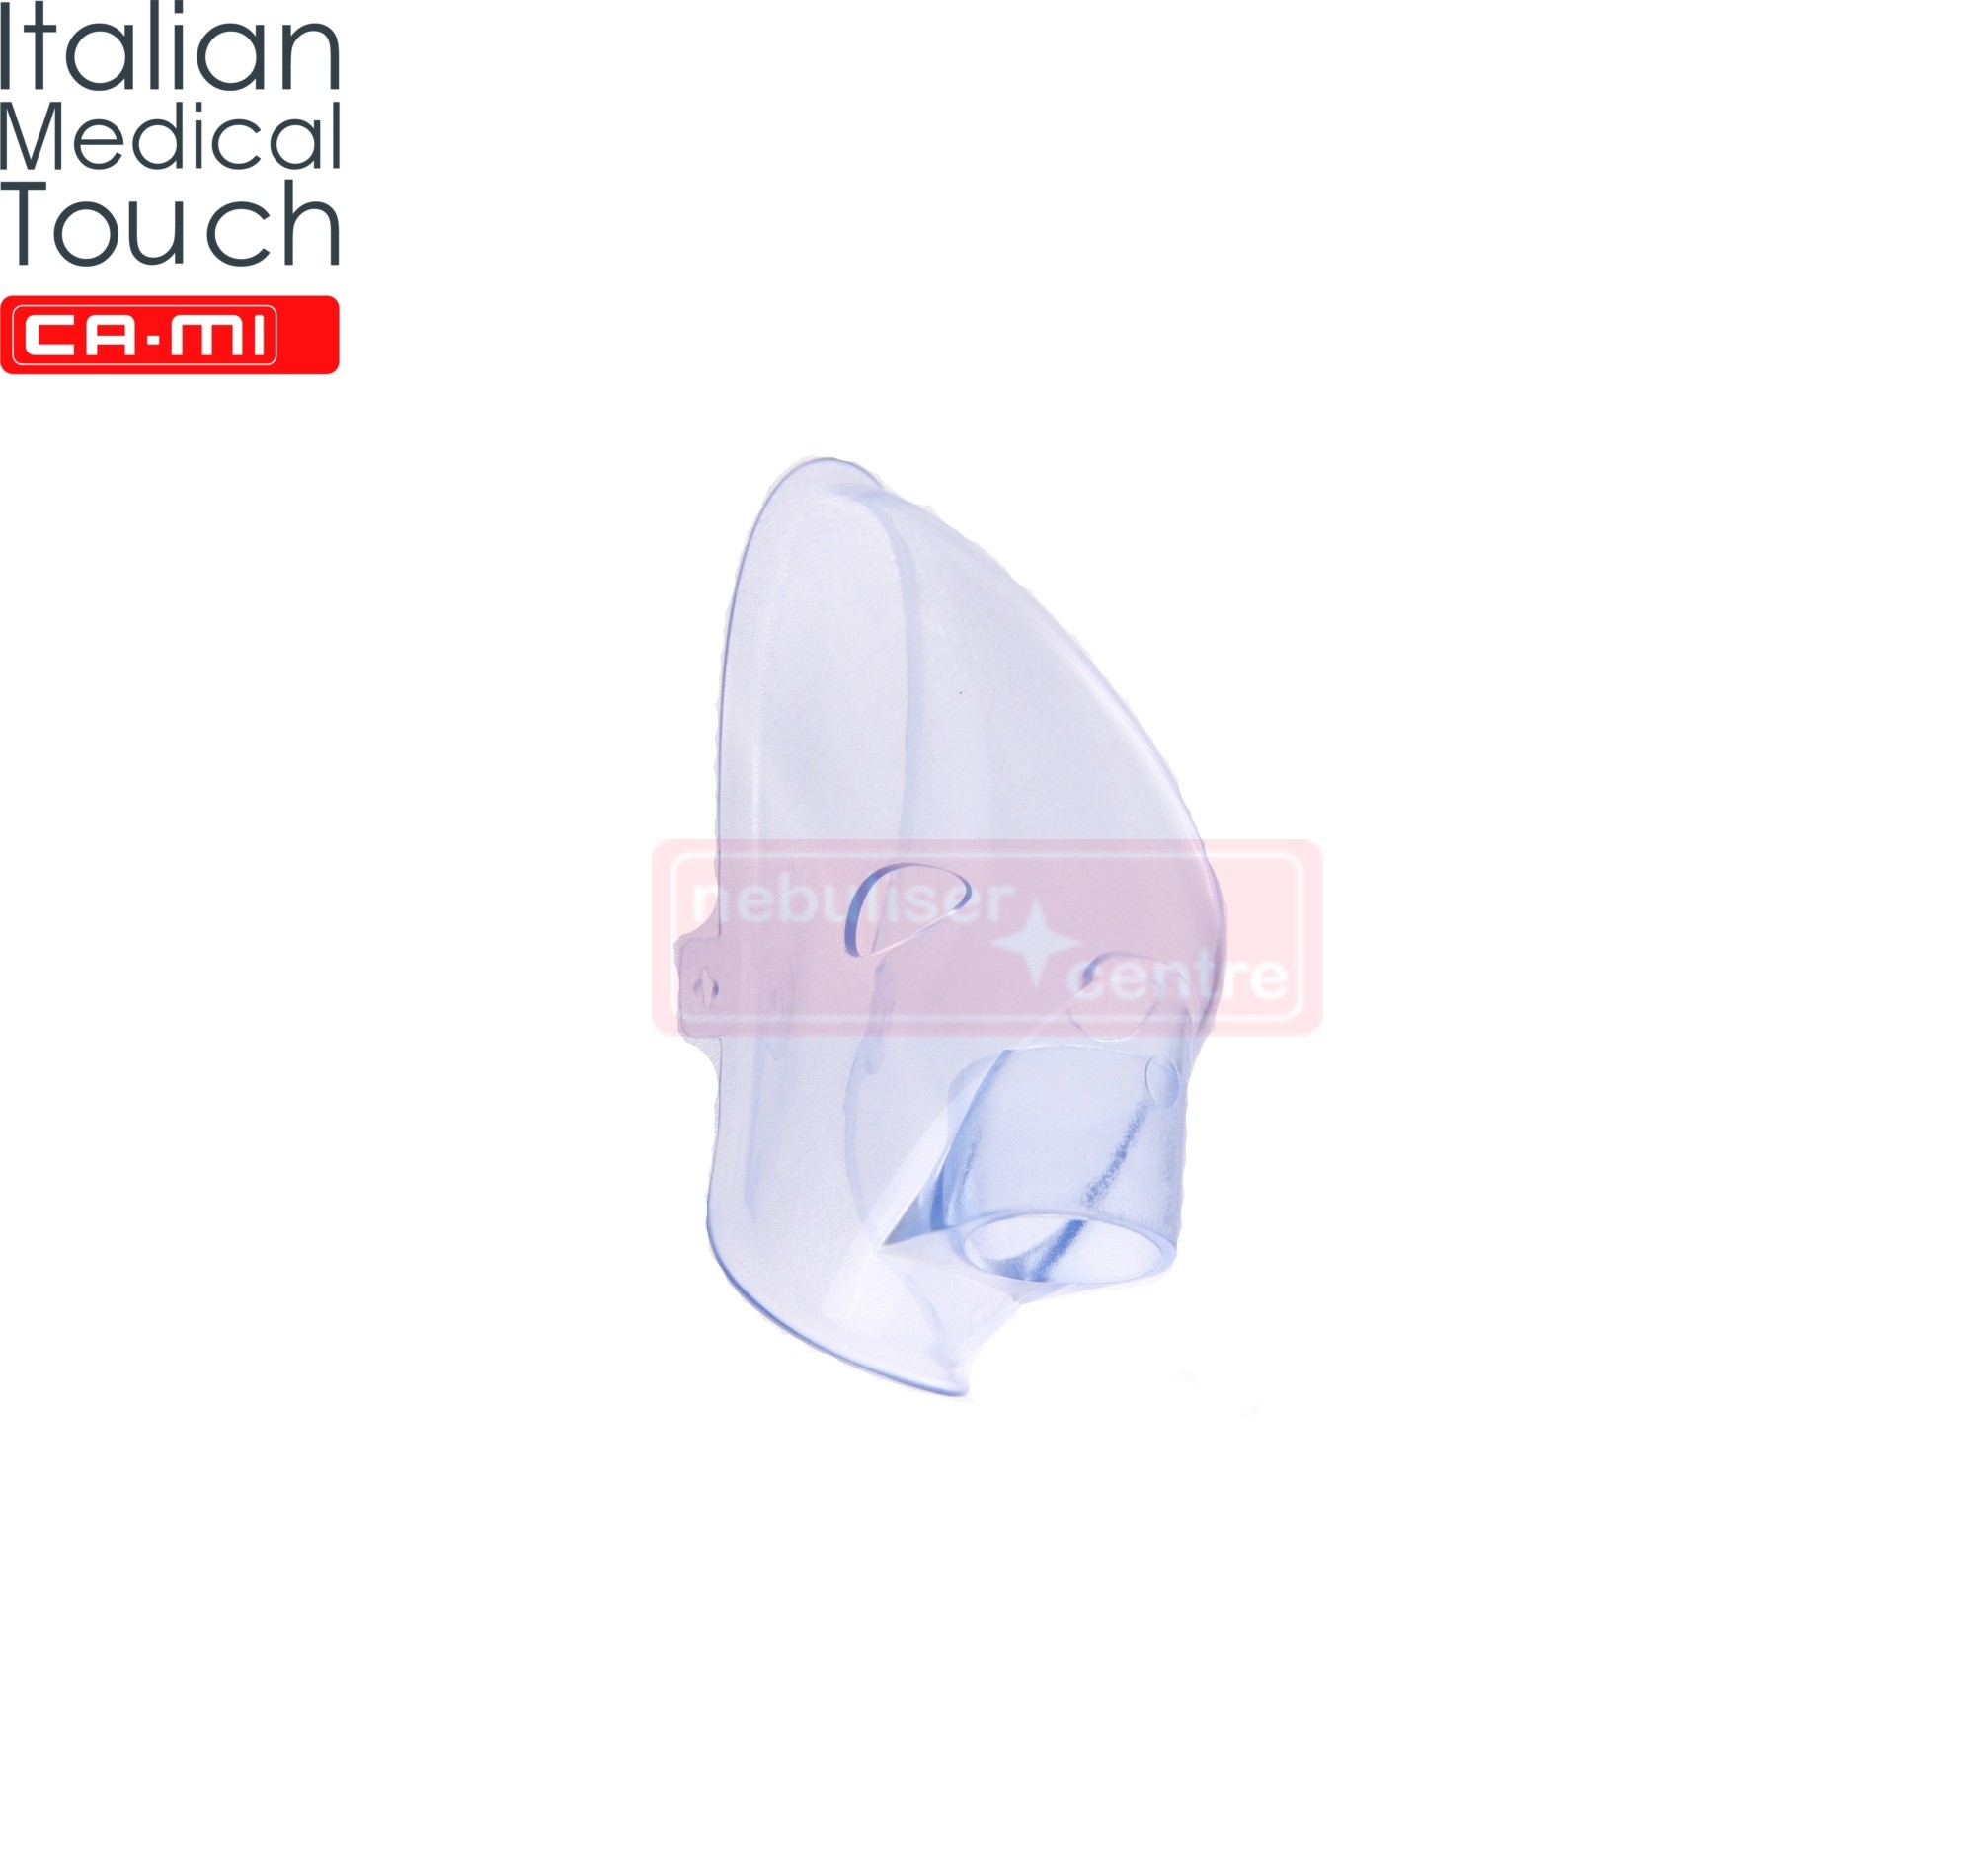 Nebuliser Mask for CA-MI HiFlo nebulisers- Child Nebuliser Mask